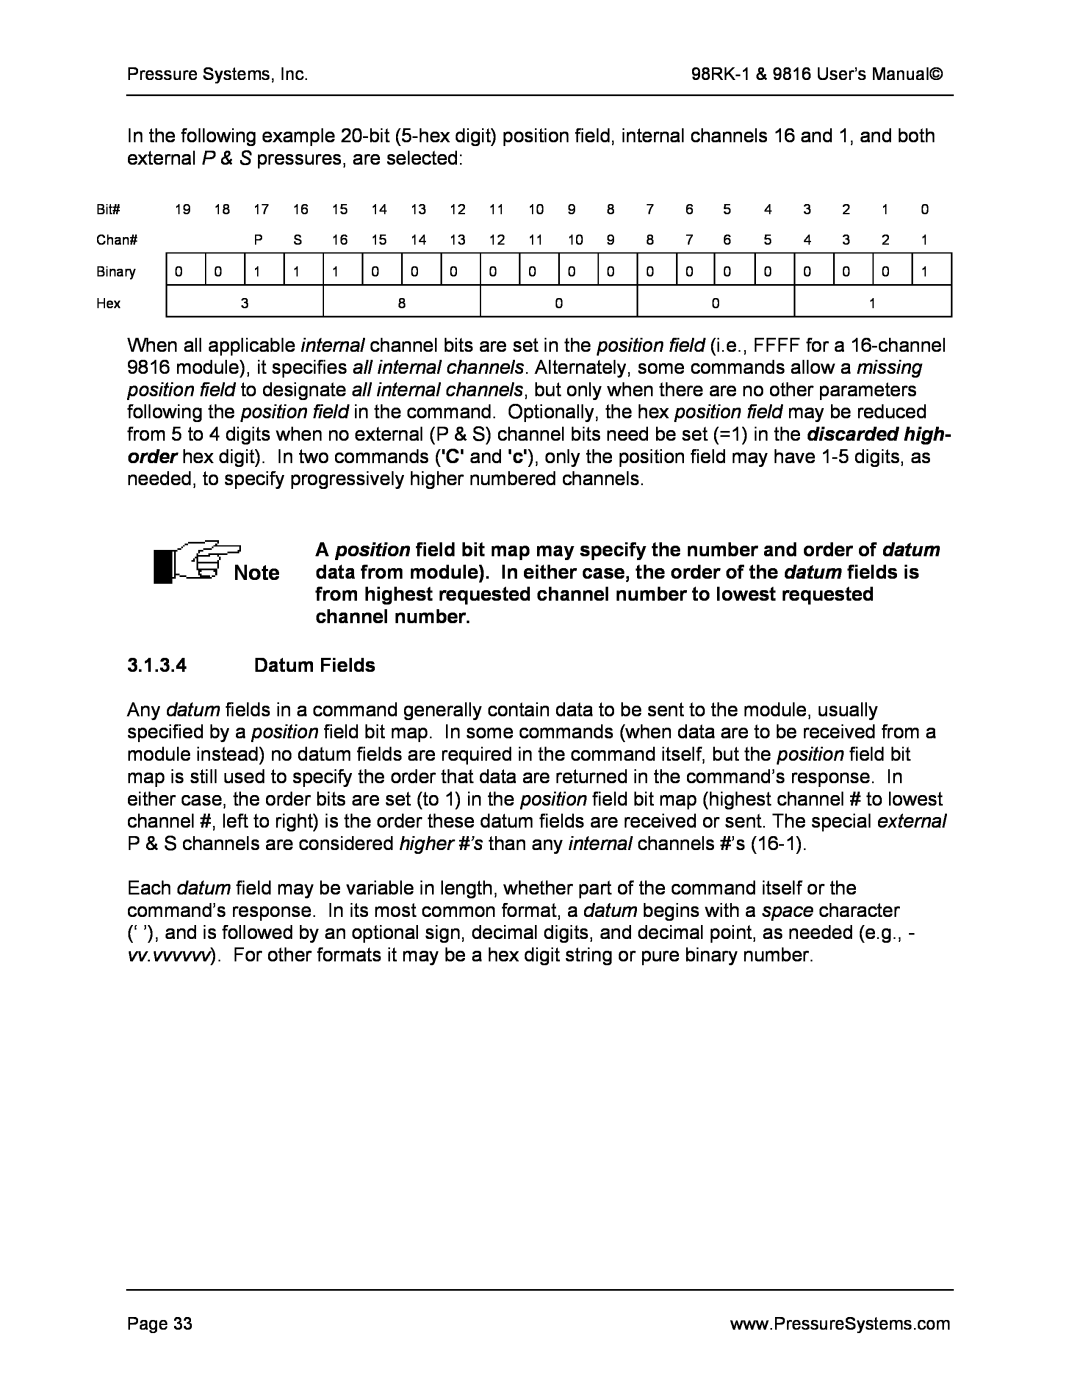 Pressure Systems 98RK-1 user manual Datum Fields 